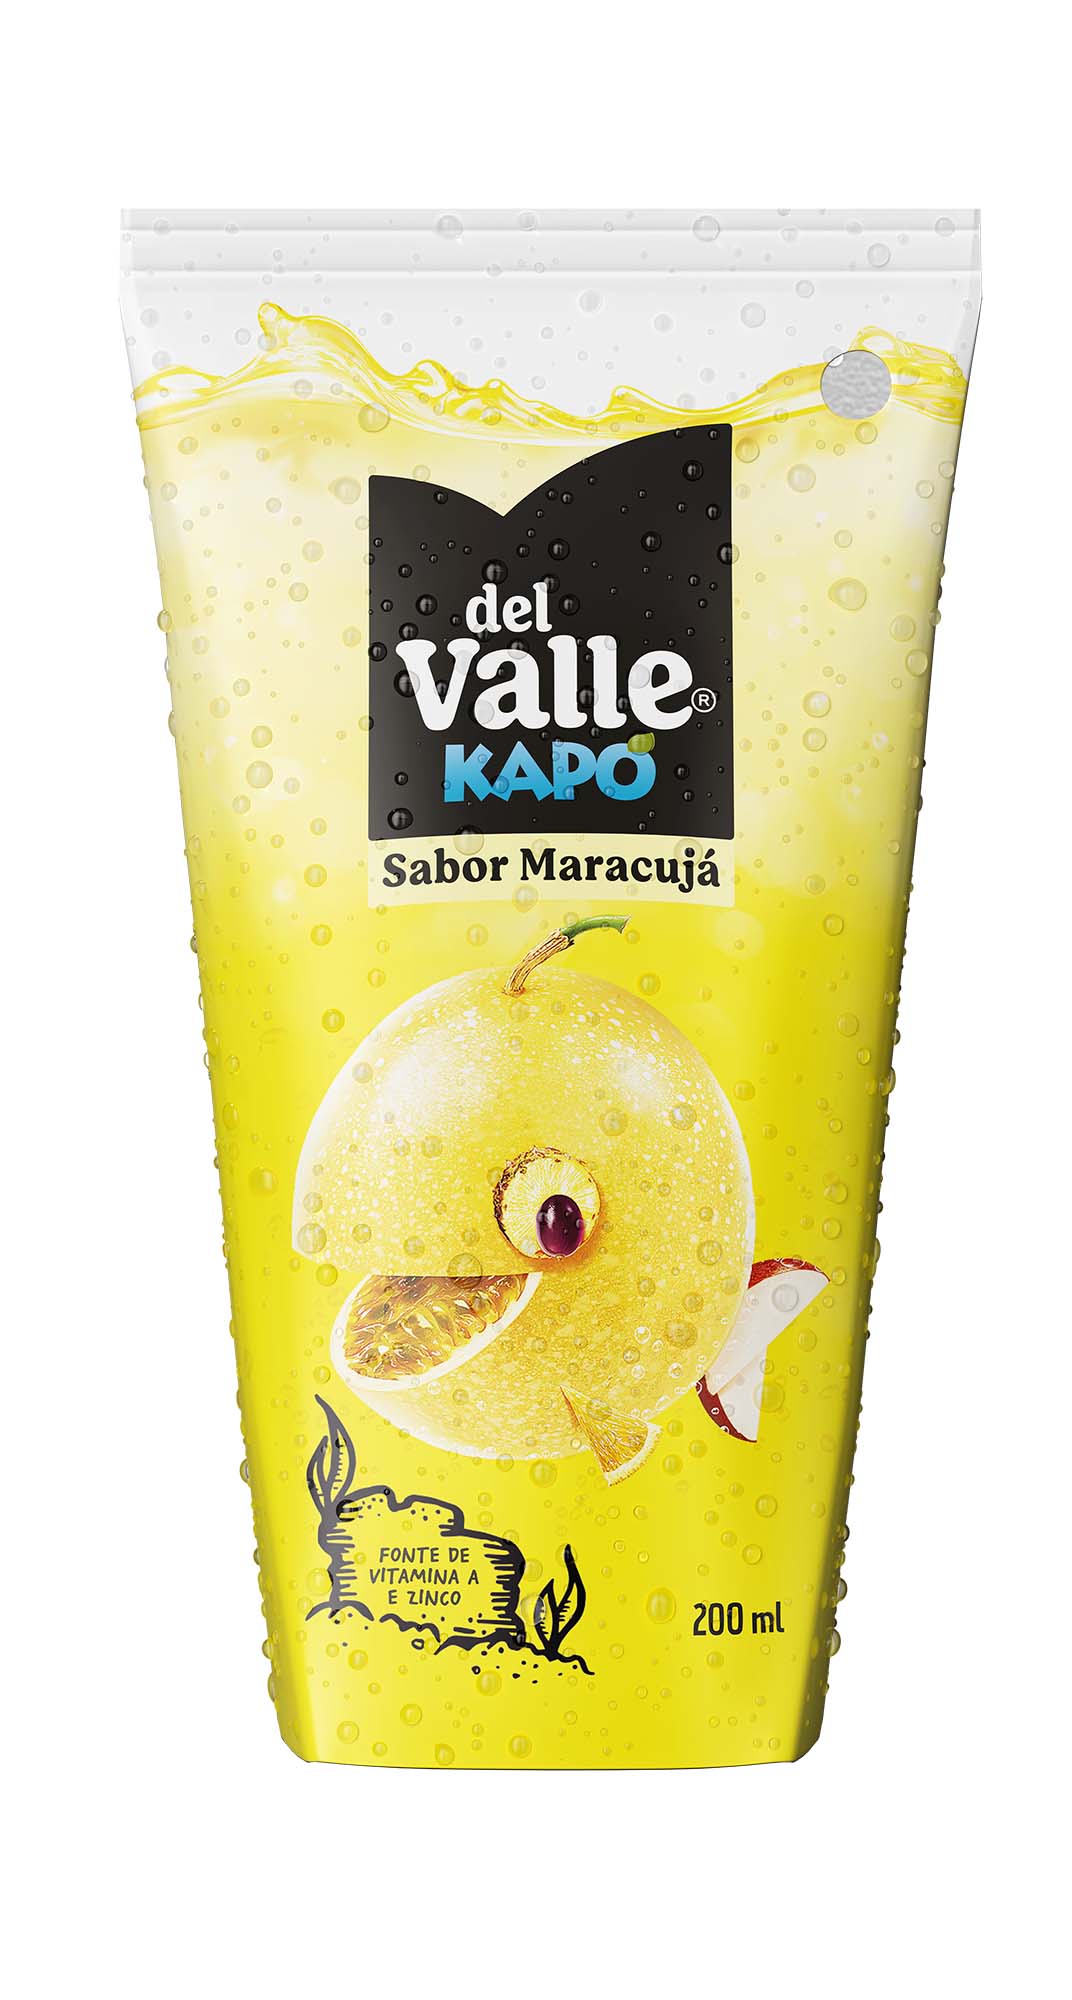 Uma embalagem de Del Valle Kapo Maracujá